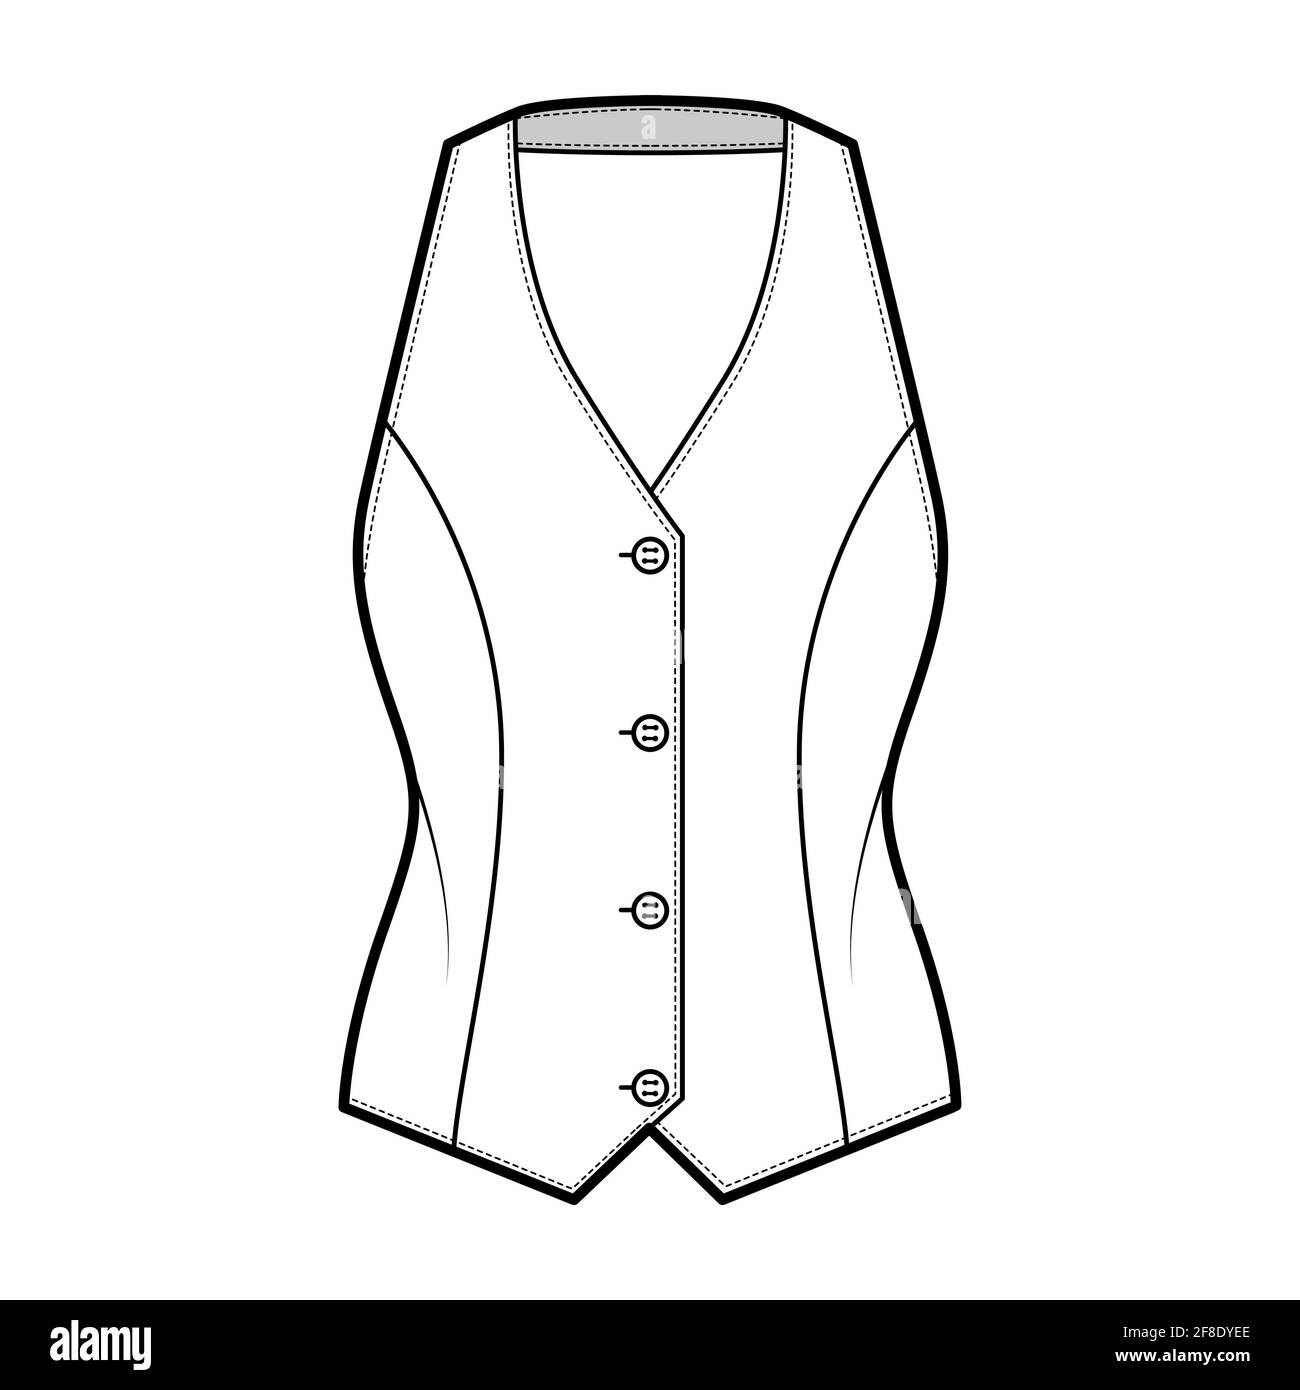 Halter vest pique waistcoat technical fashion illustration with